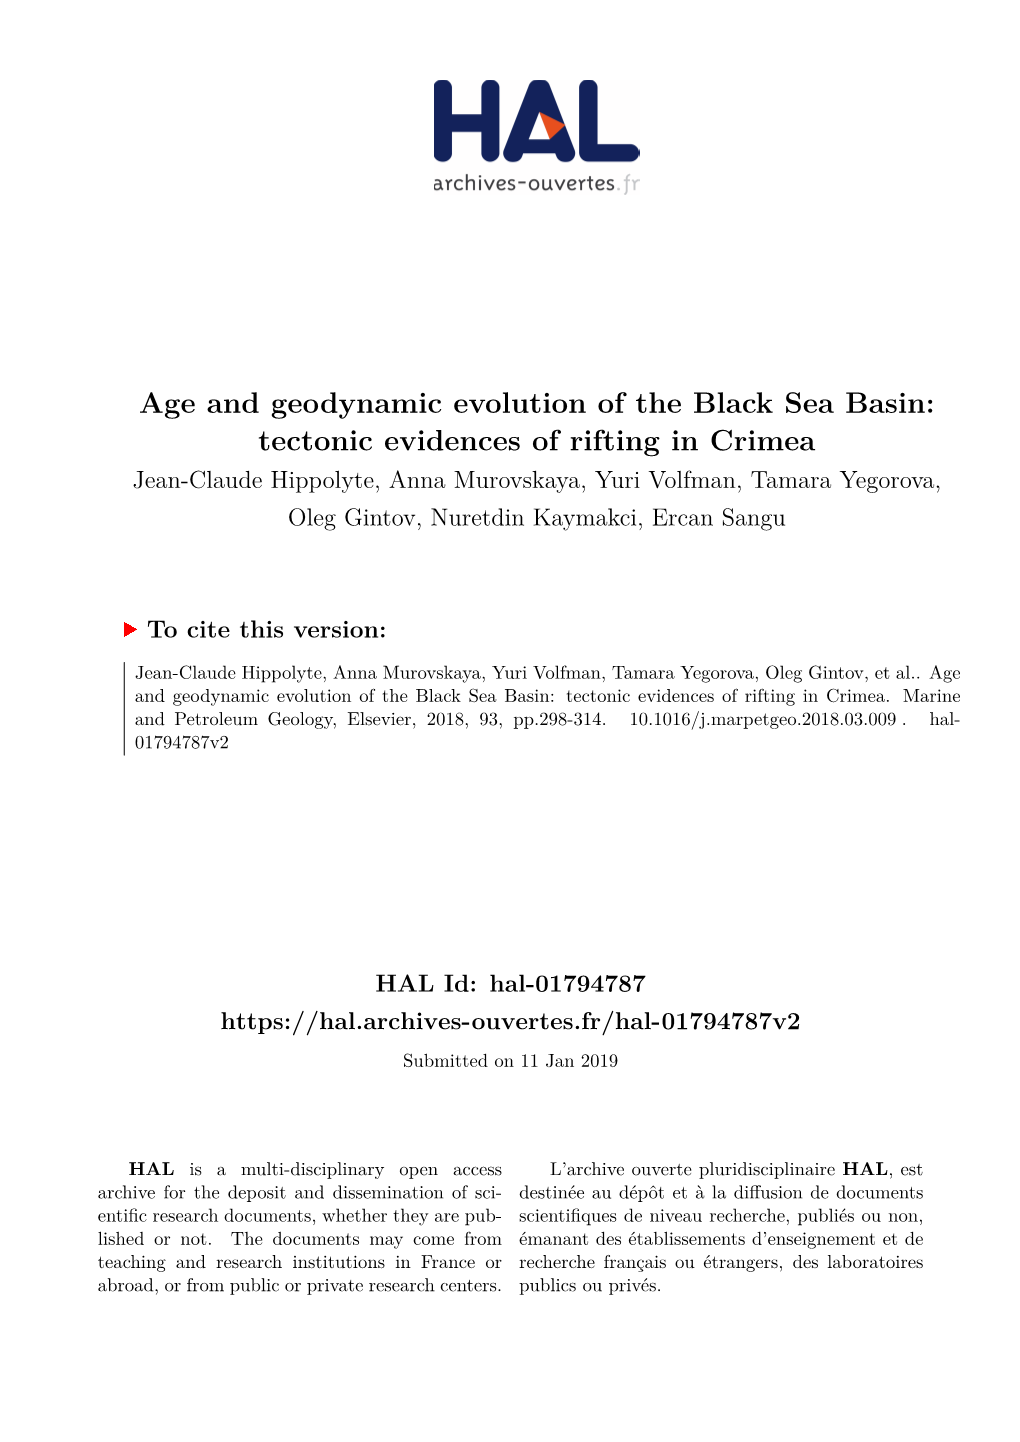 Age and Geodynamic Evolution of the Black Sea Basin: Tectonic Evidences of Rifting in Crimea